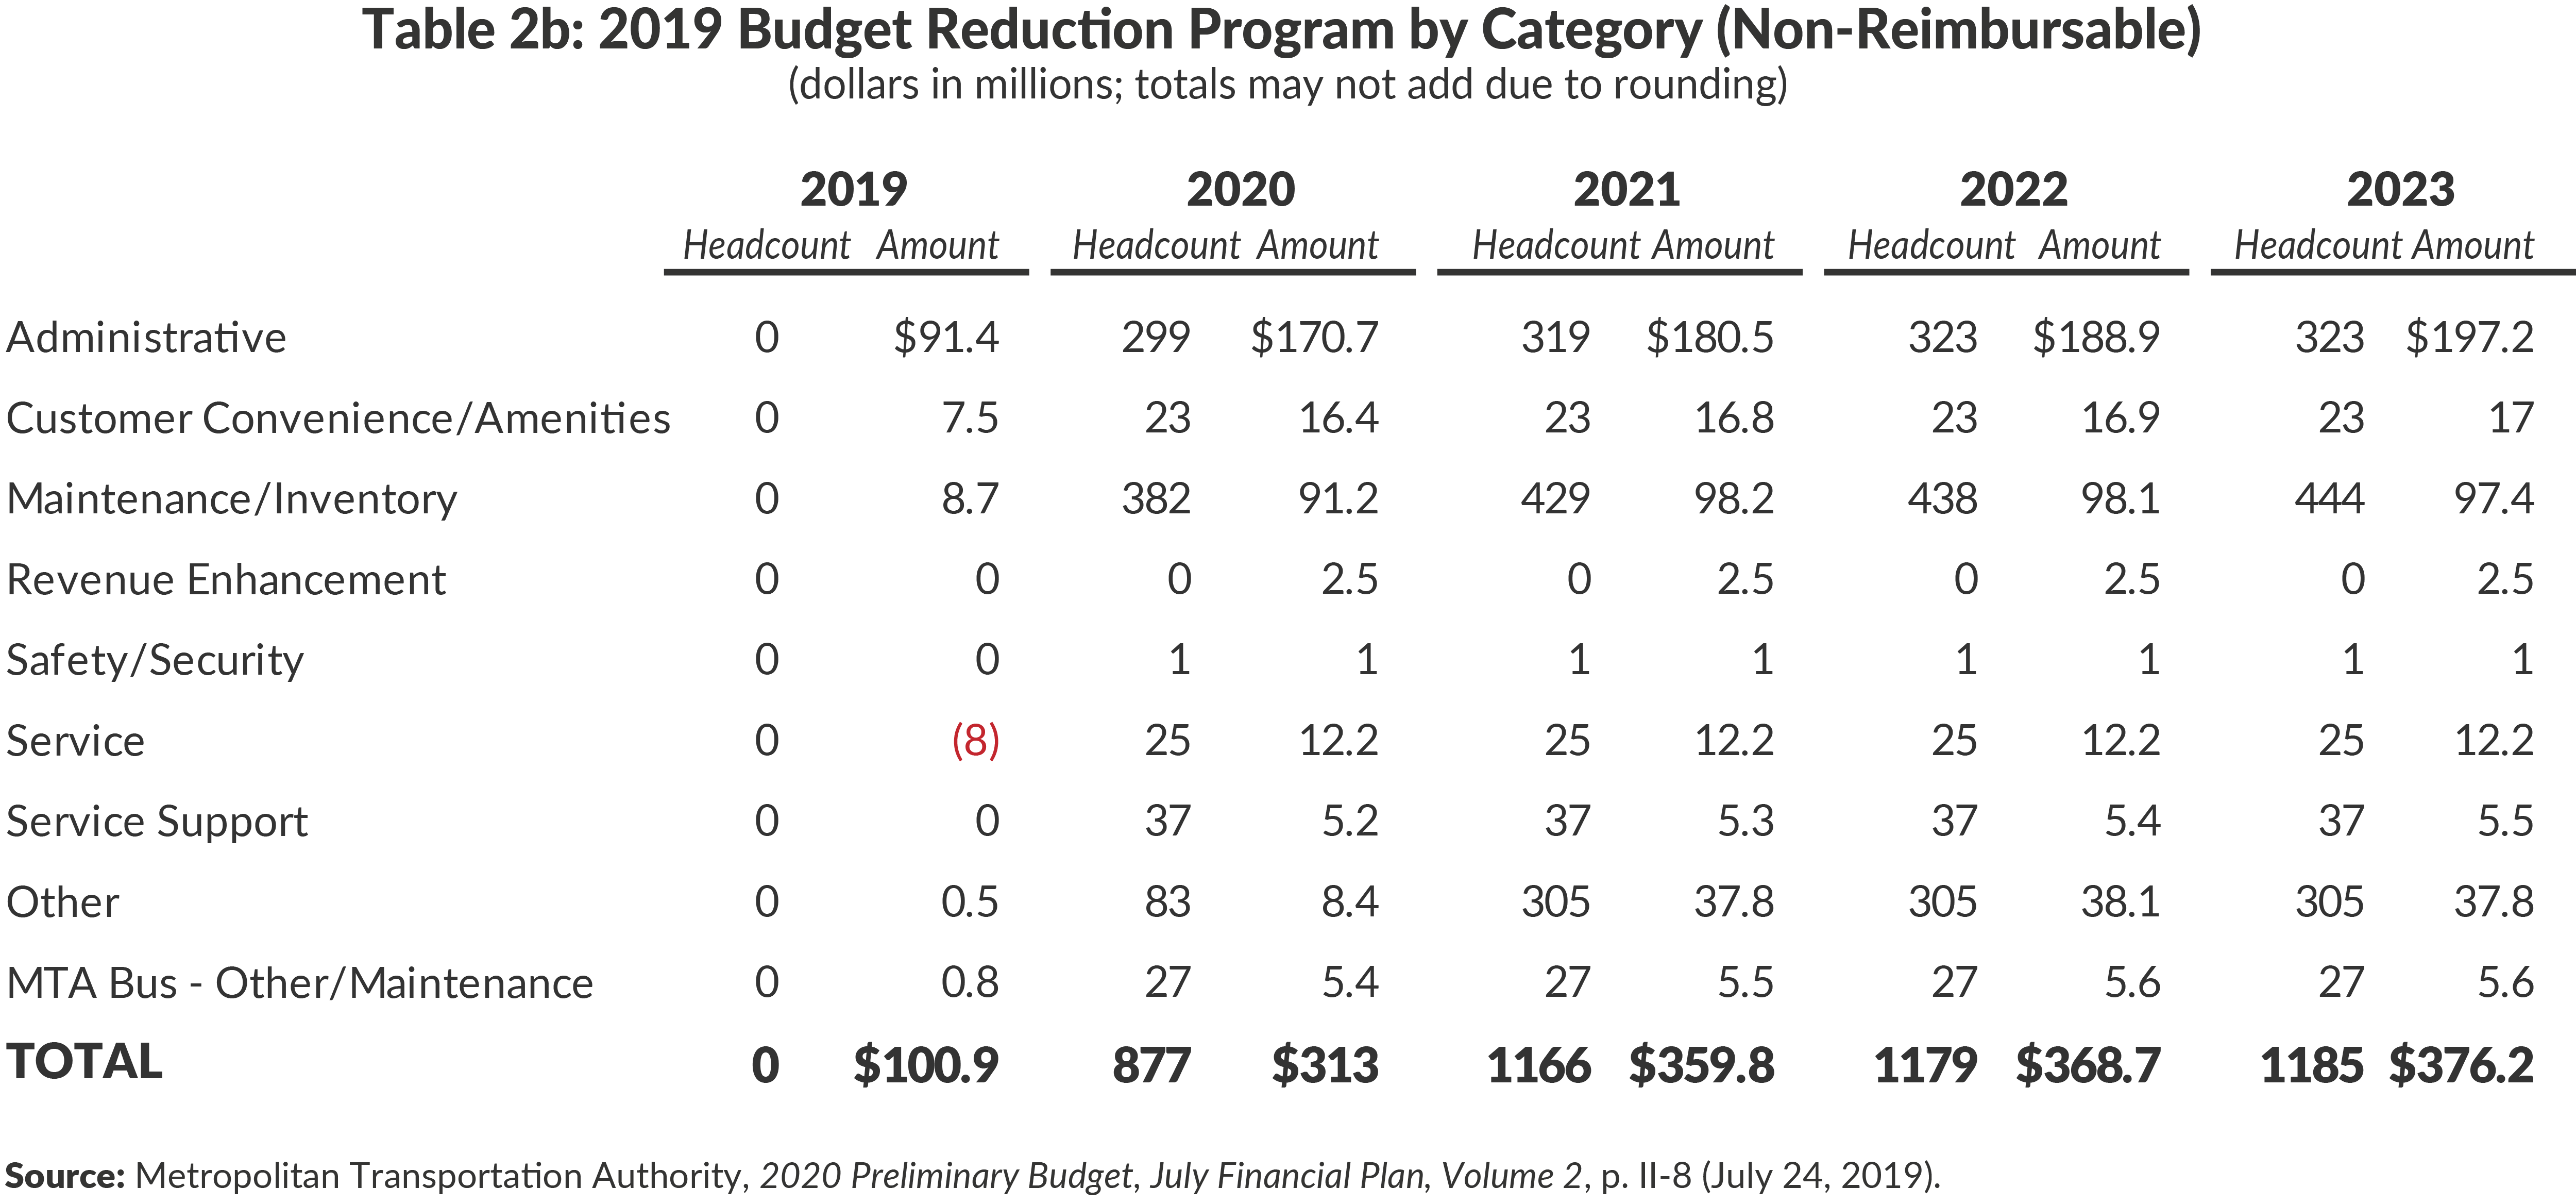 Table 2b: 2019 Budget Reduction Program by Category (Non-Reimbursable) 